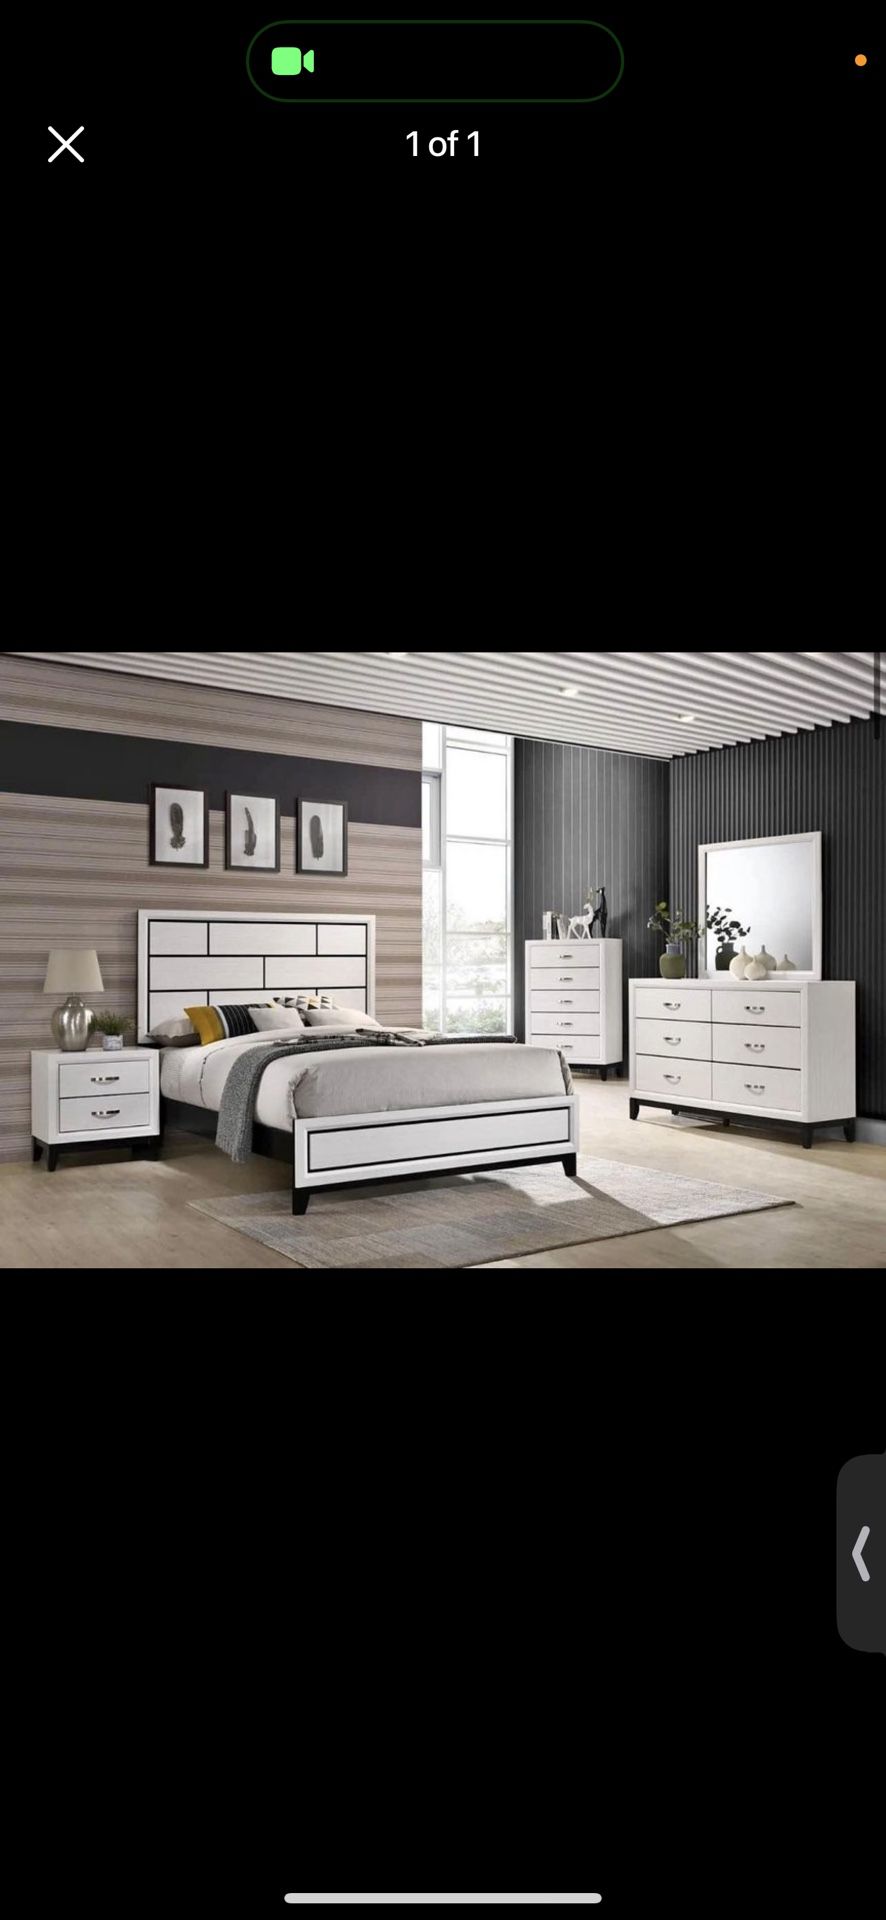 Brand New Complete Bedroom Set for $849!!!!